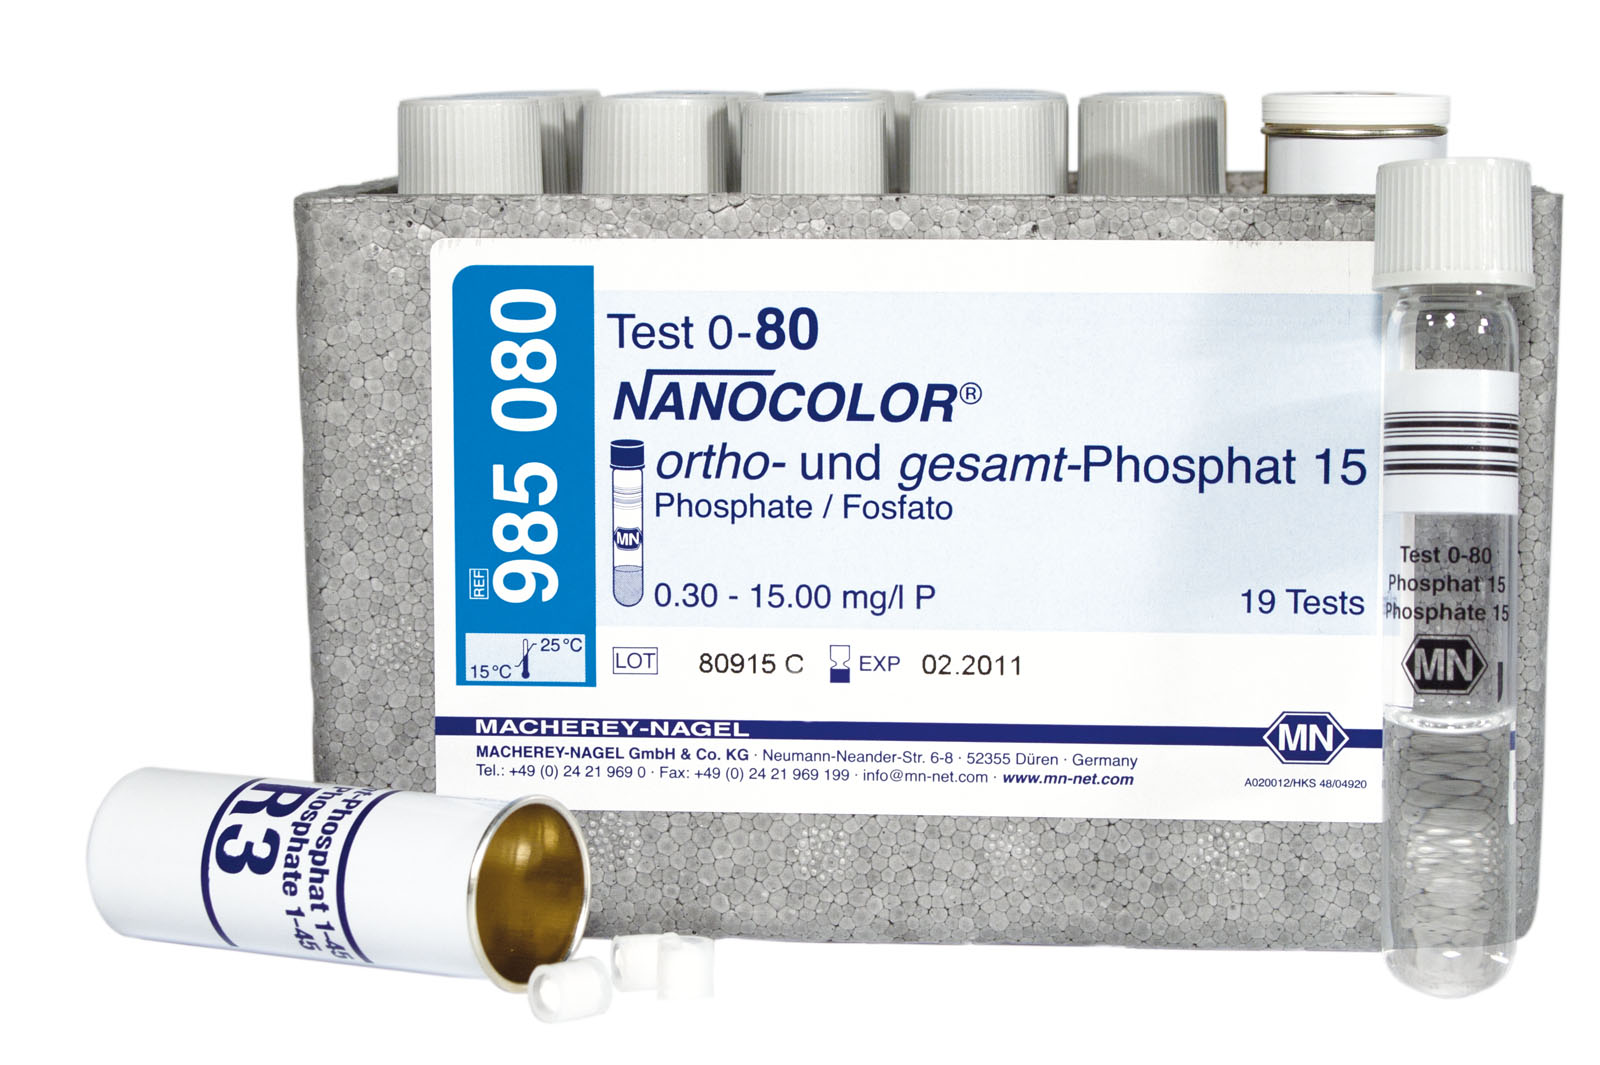 RUK NANOCOLOR- ortho- und gesamt-Phosphat 15